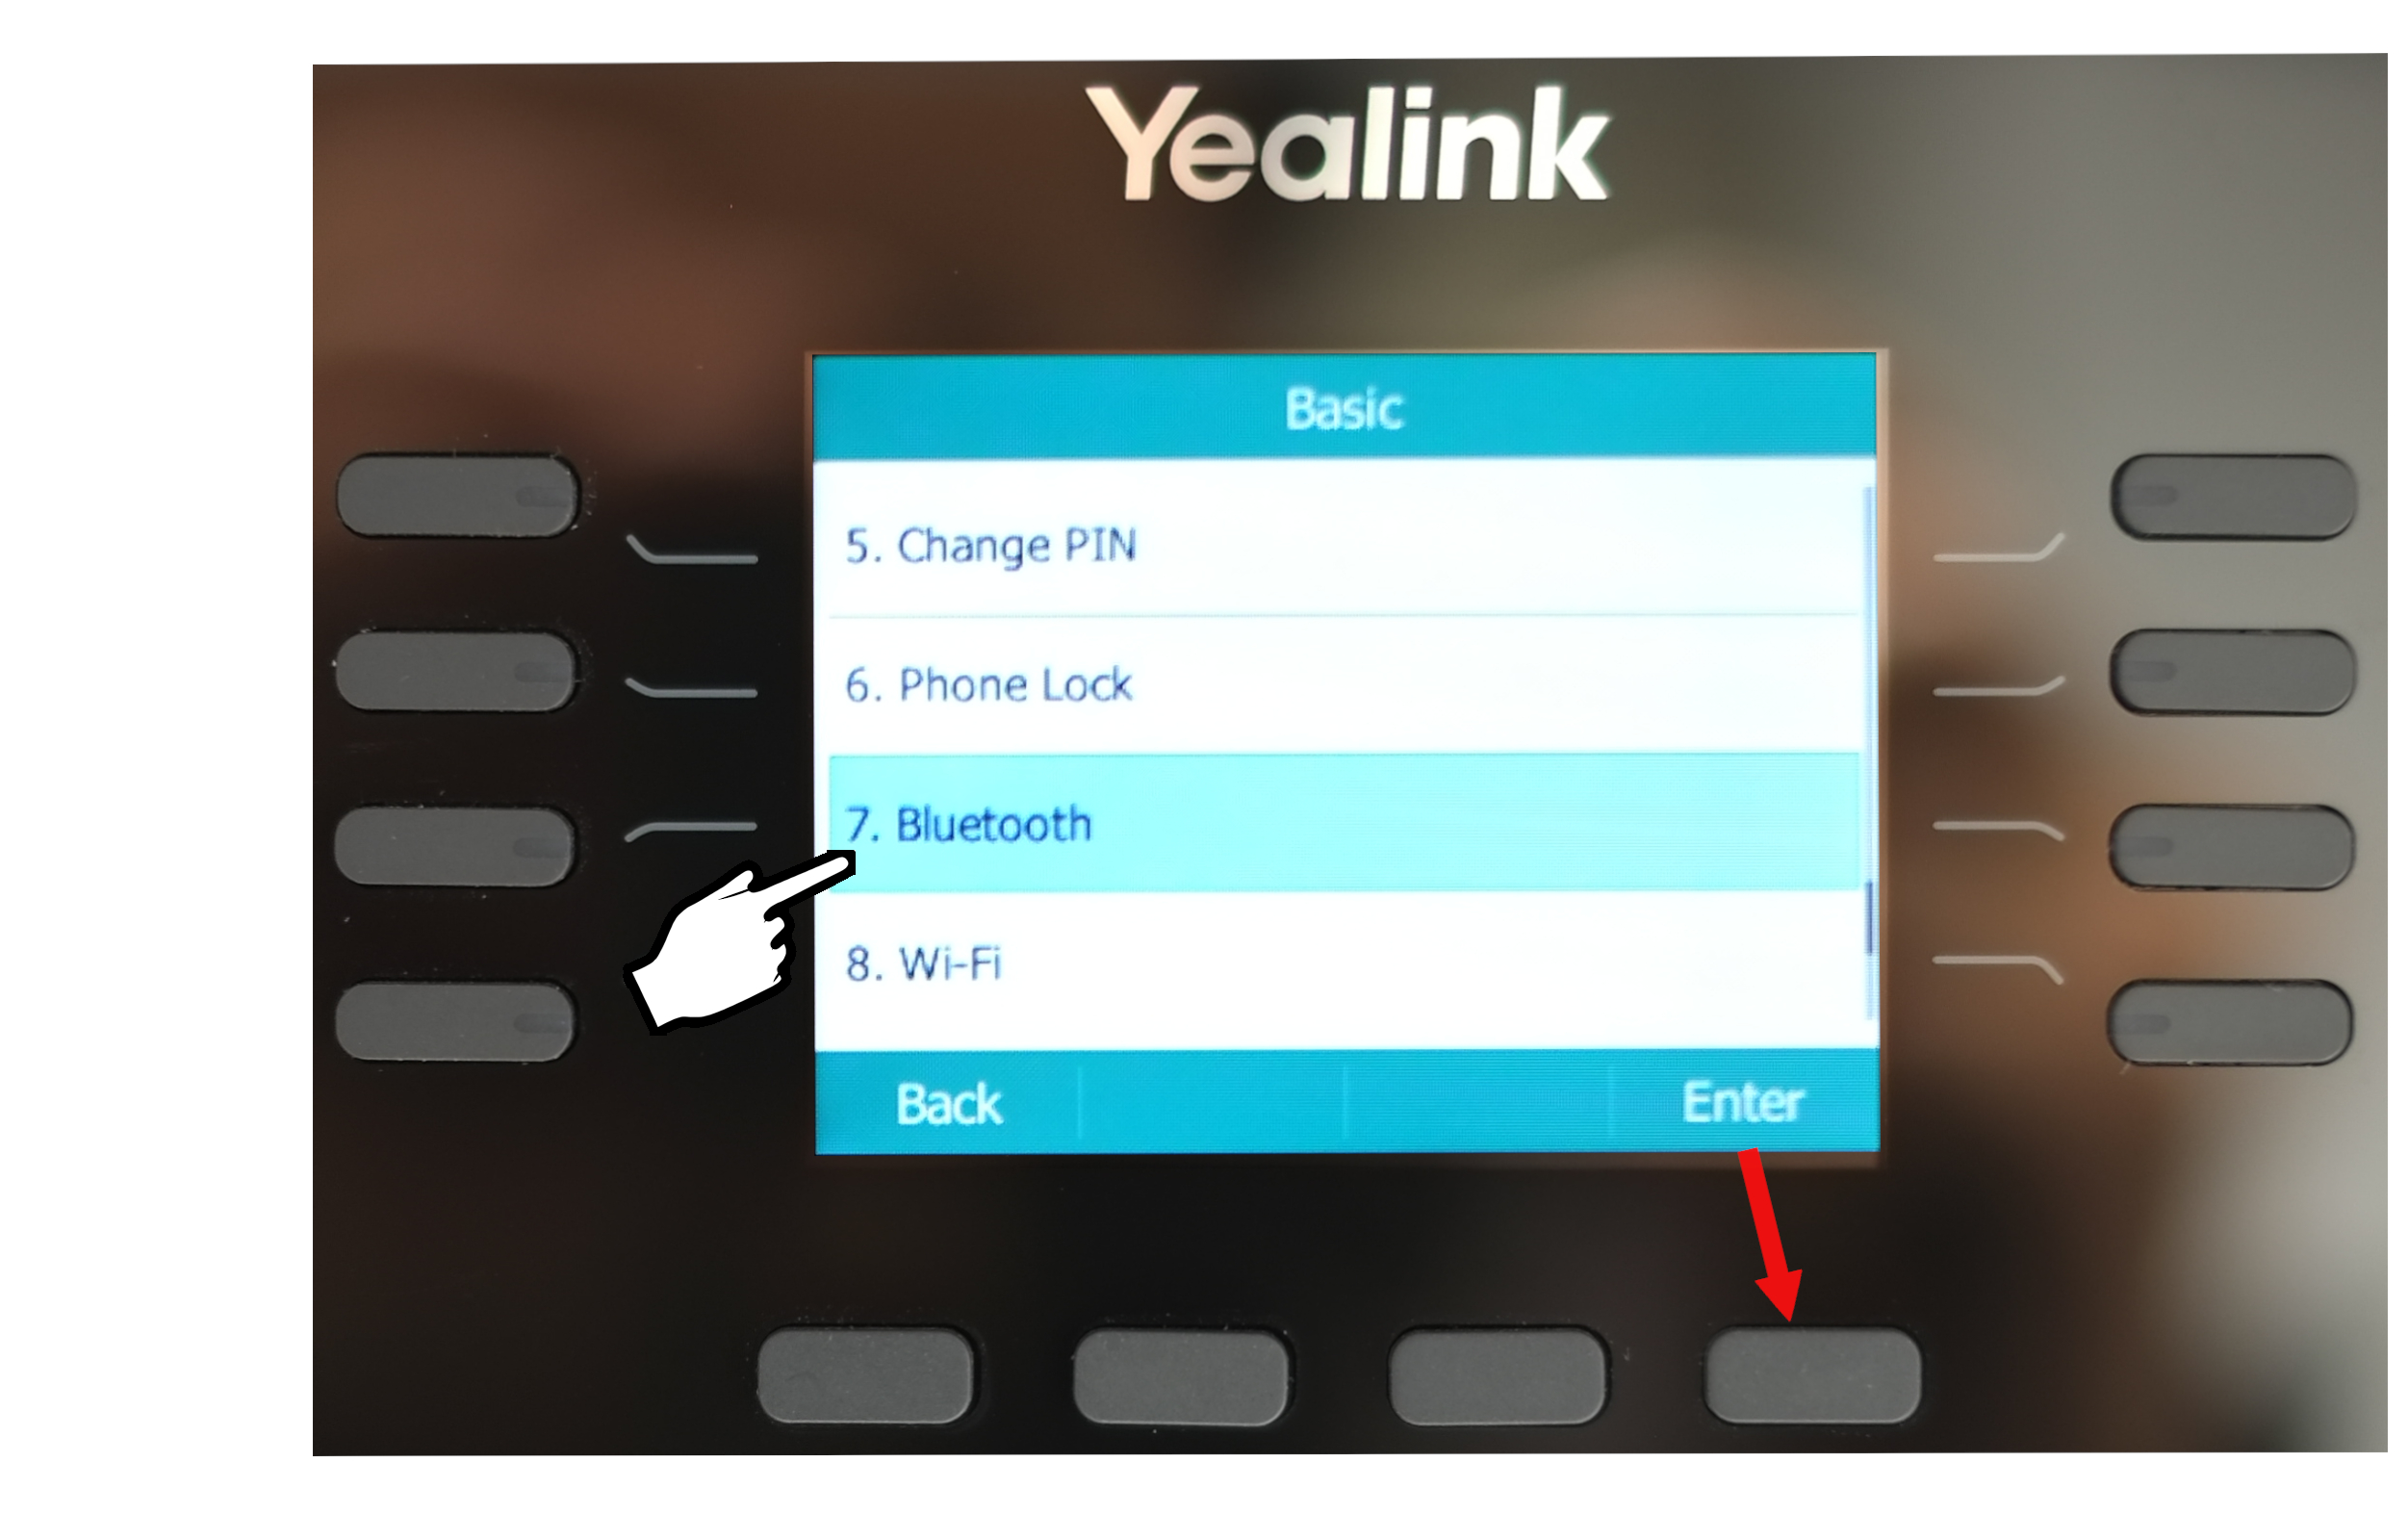 Yealink Bluetooth setting page